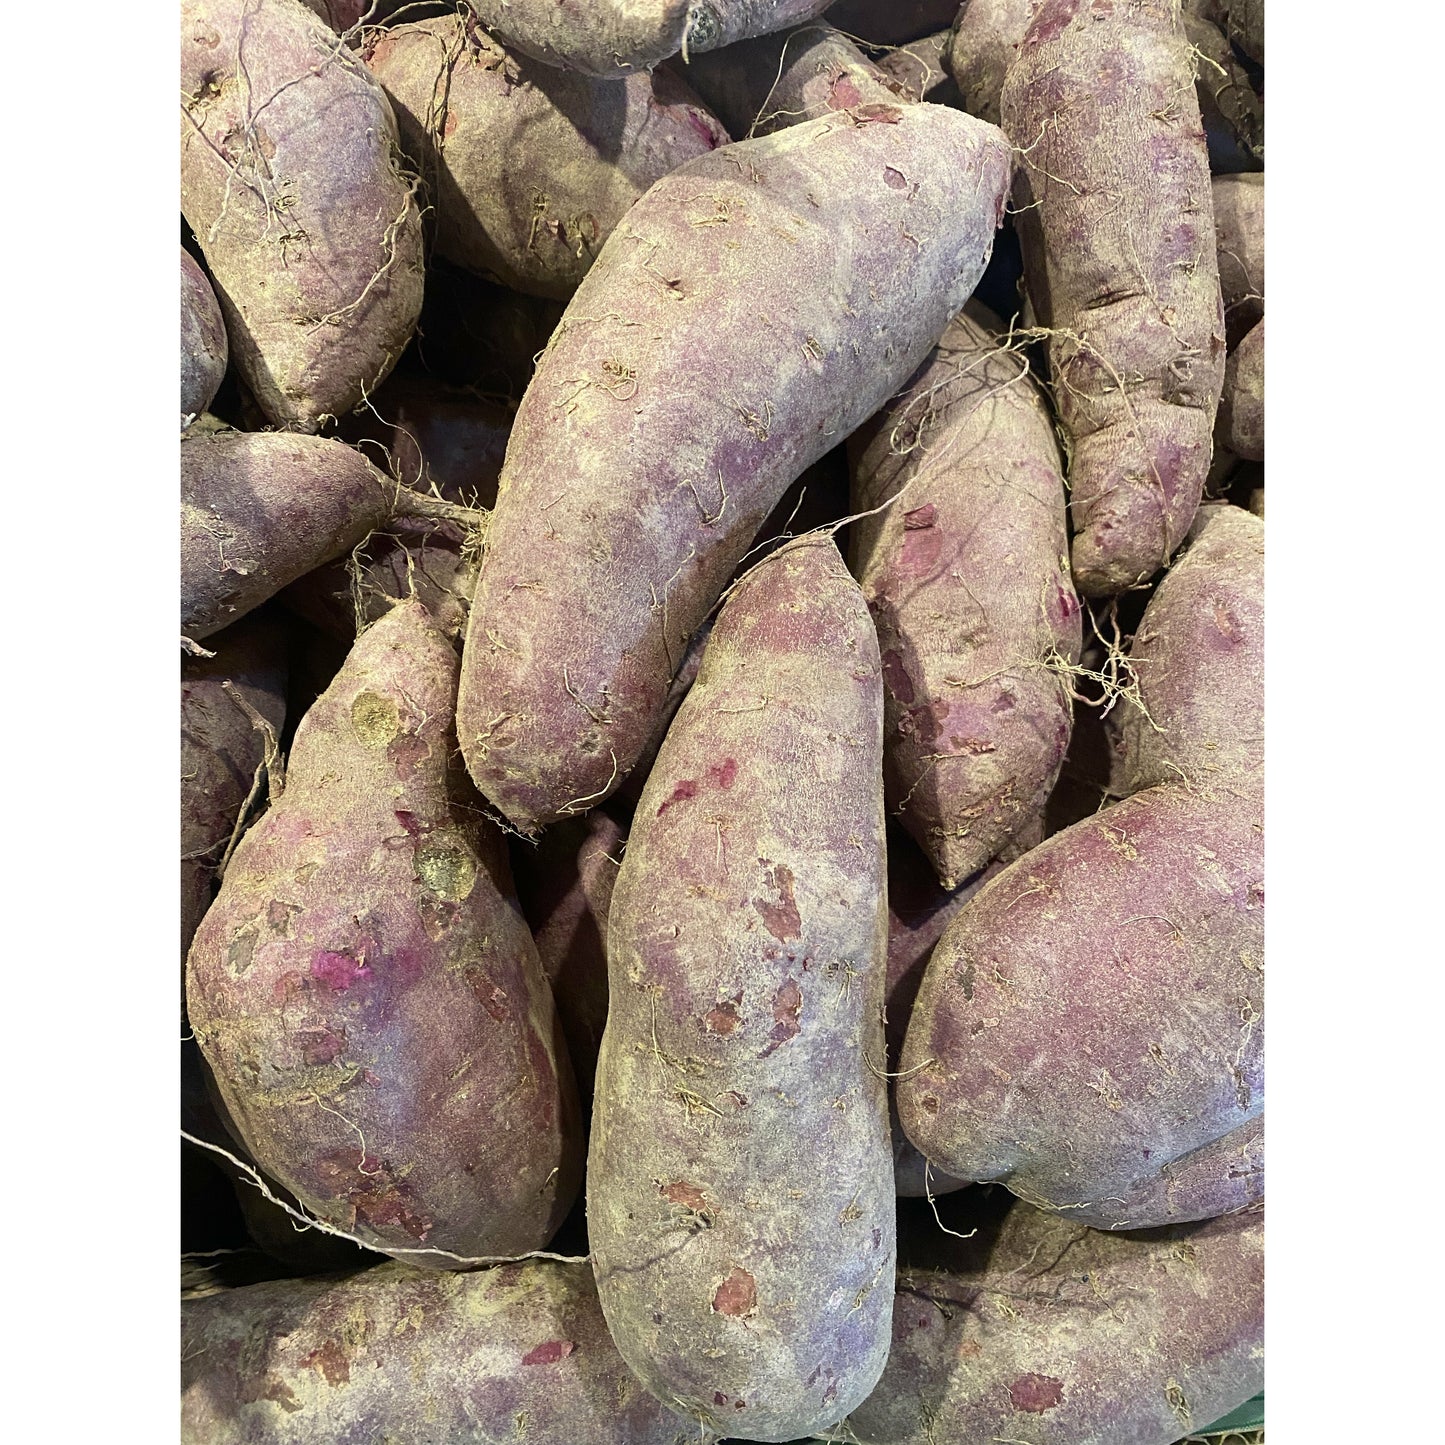 Melon - Purple Sweet Potatoes 2.6-3 lbs